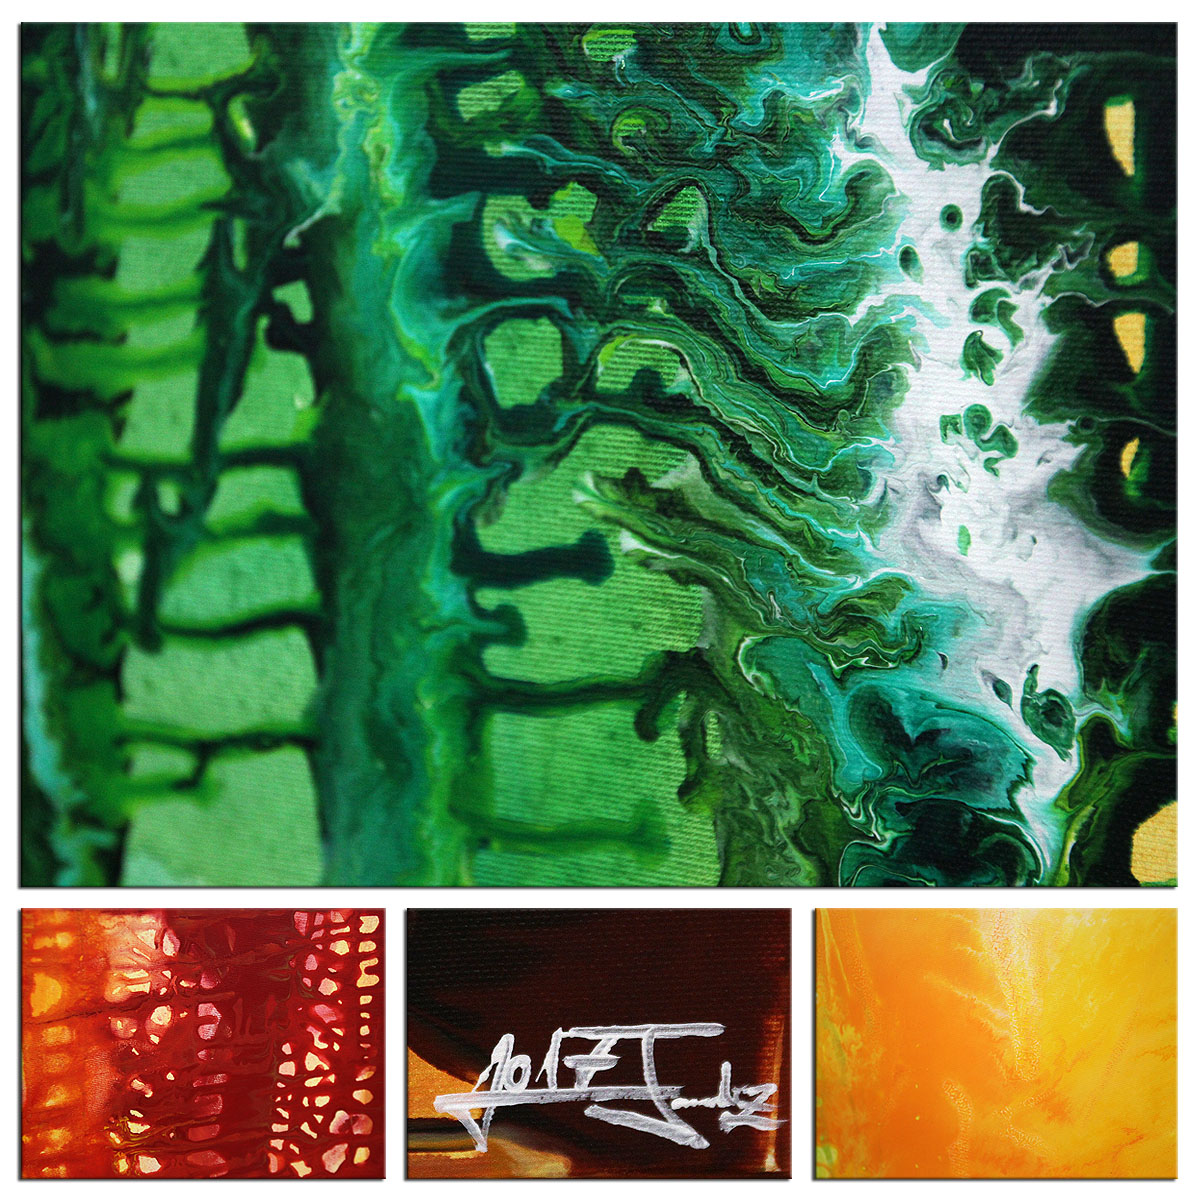 Acrylbilder, J. Fernandez: "Liquid Colours IV" (ri)